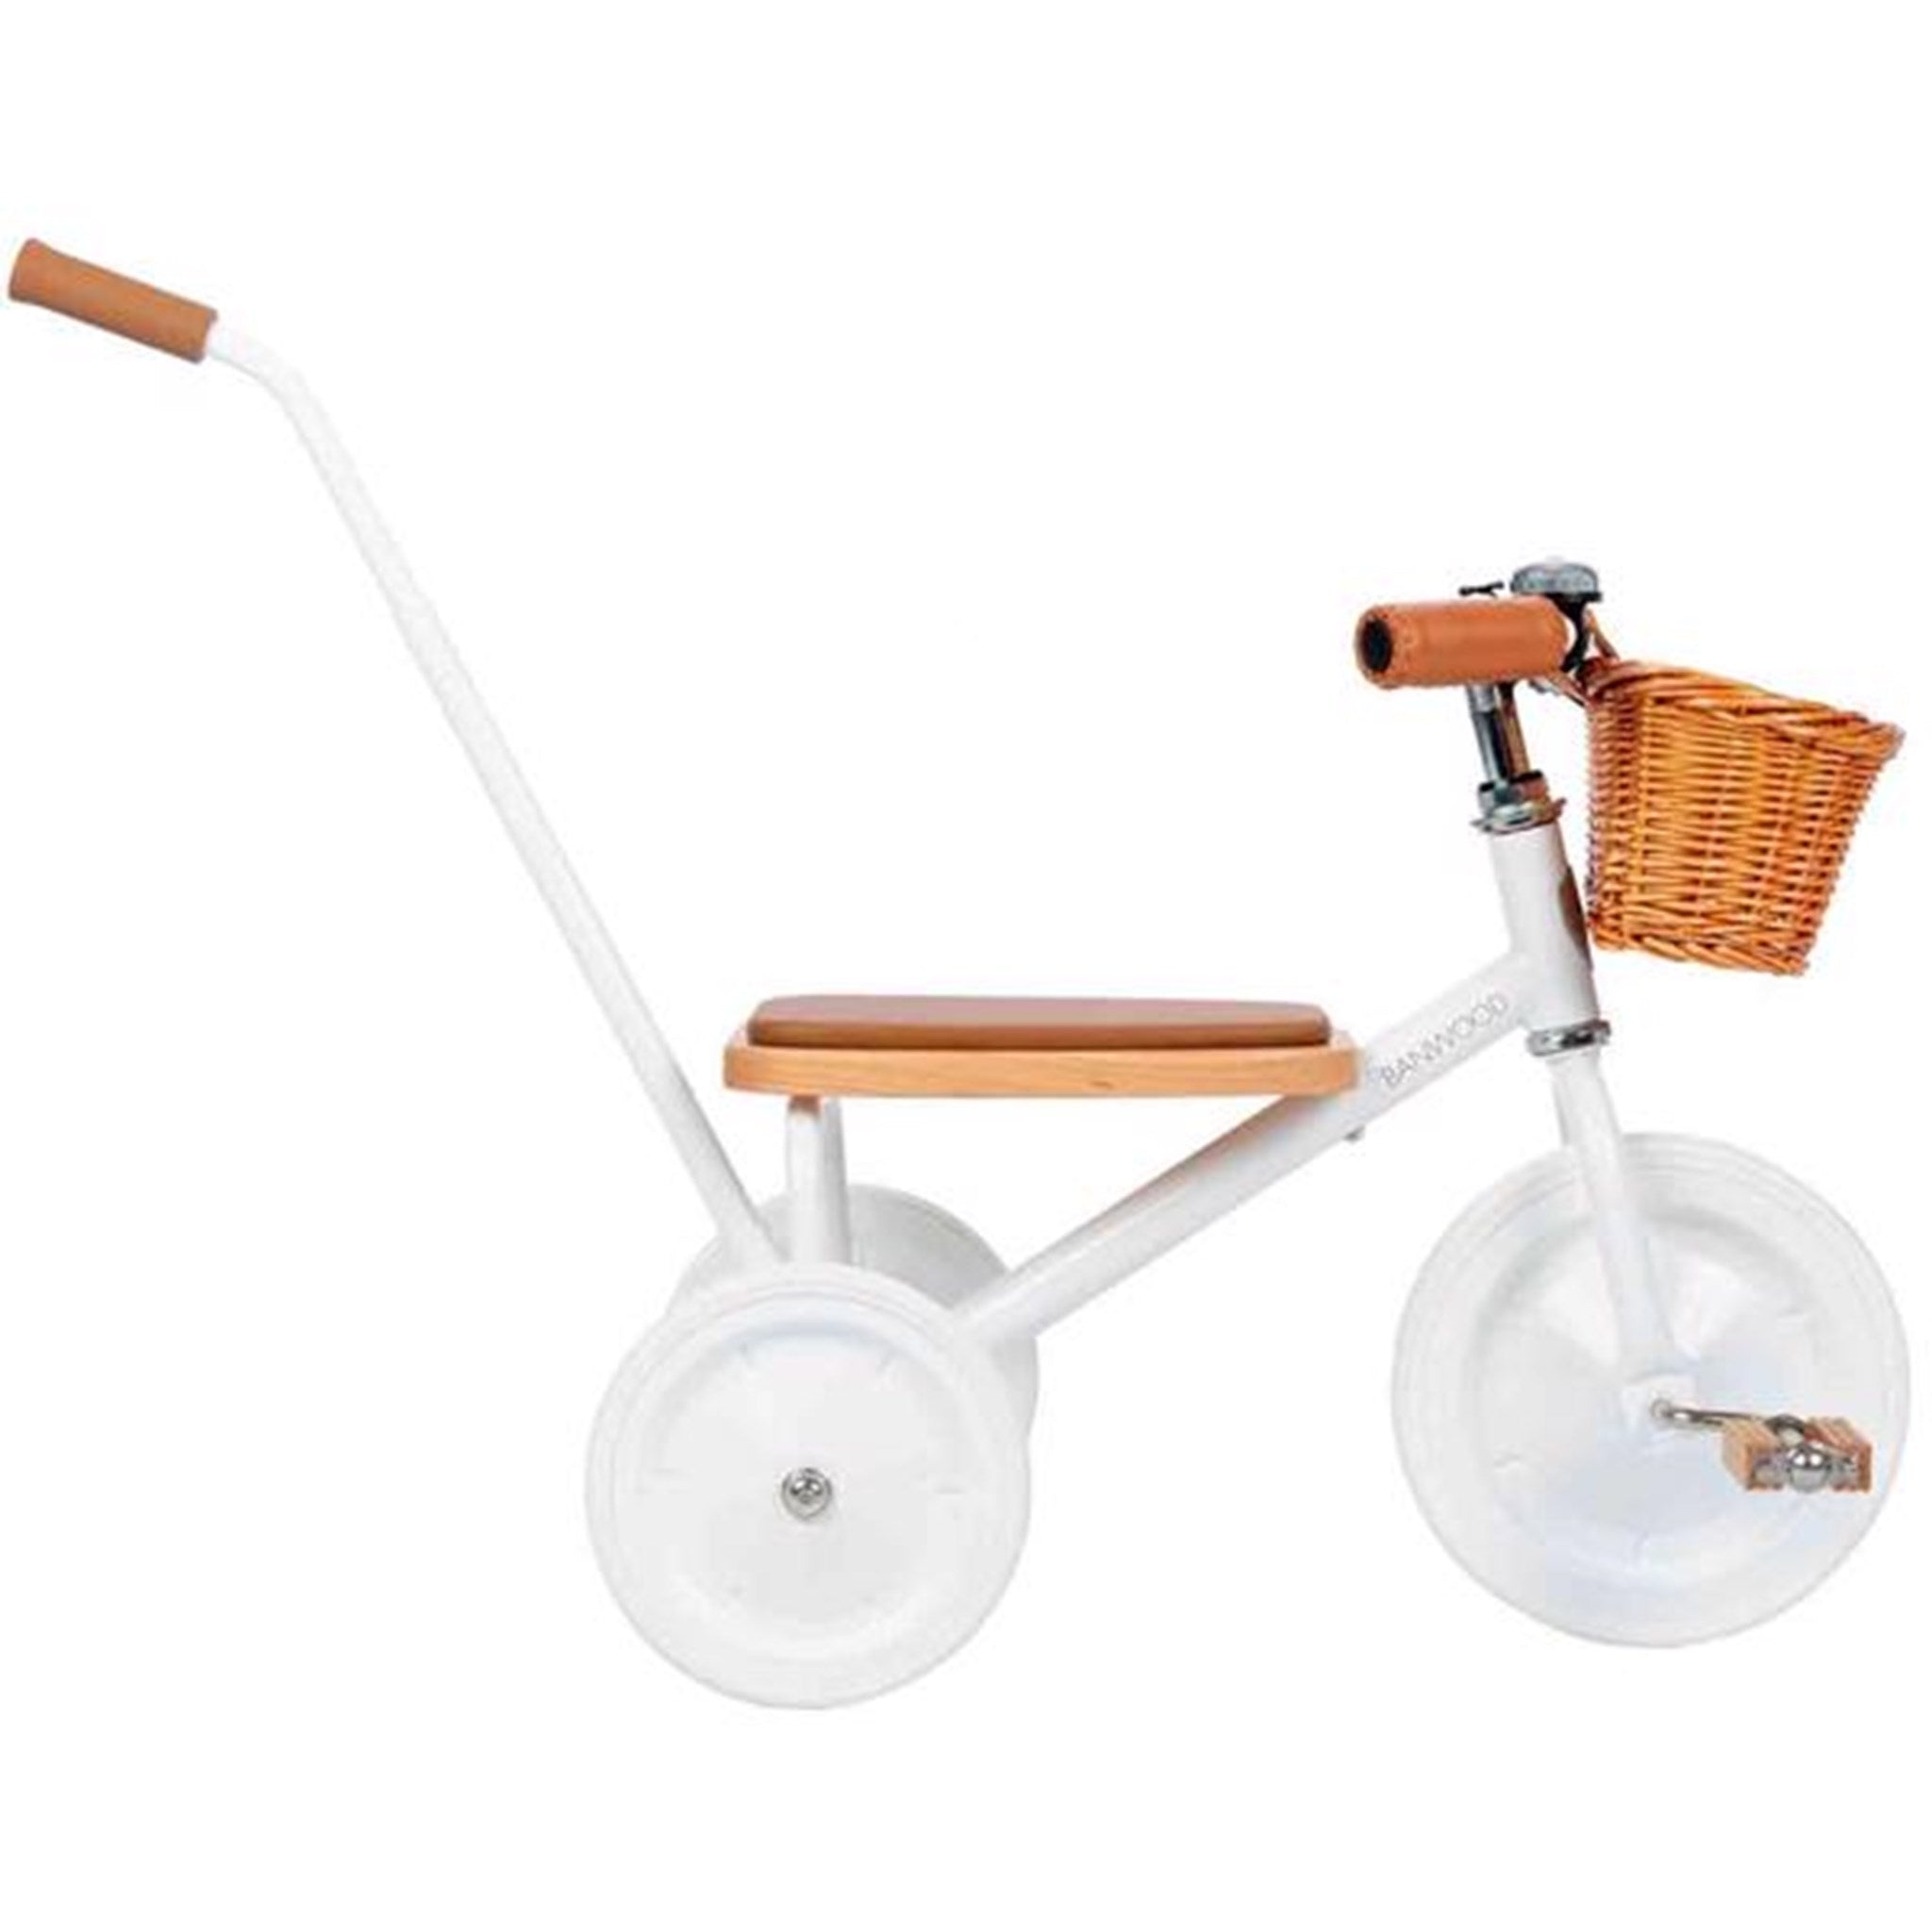 Banwood Trike White